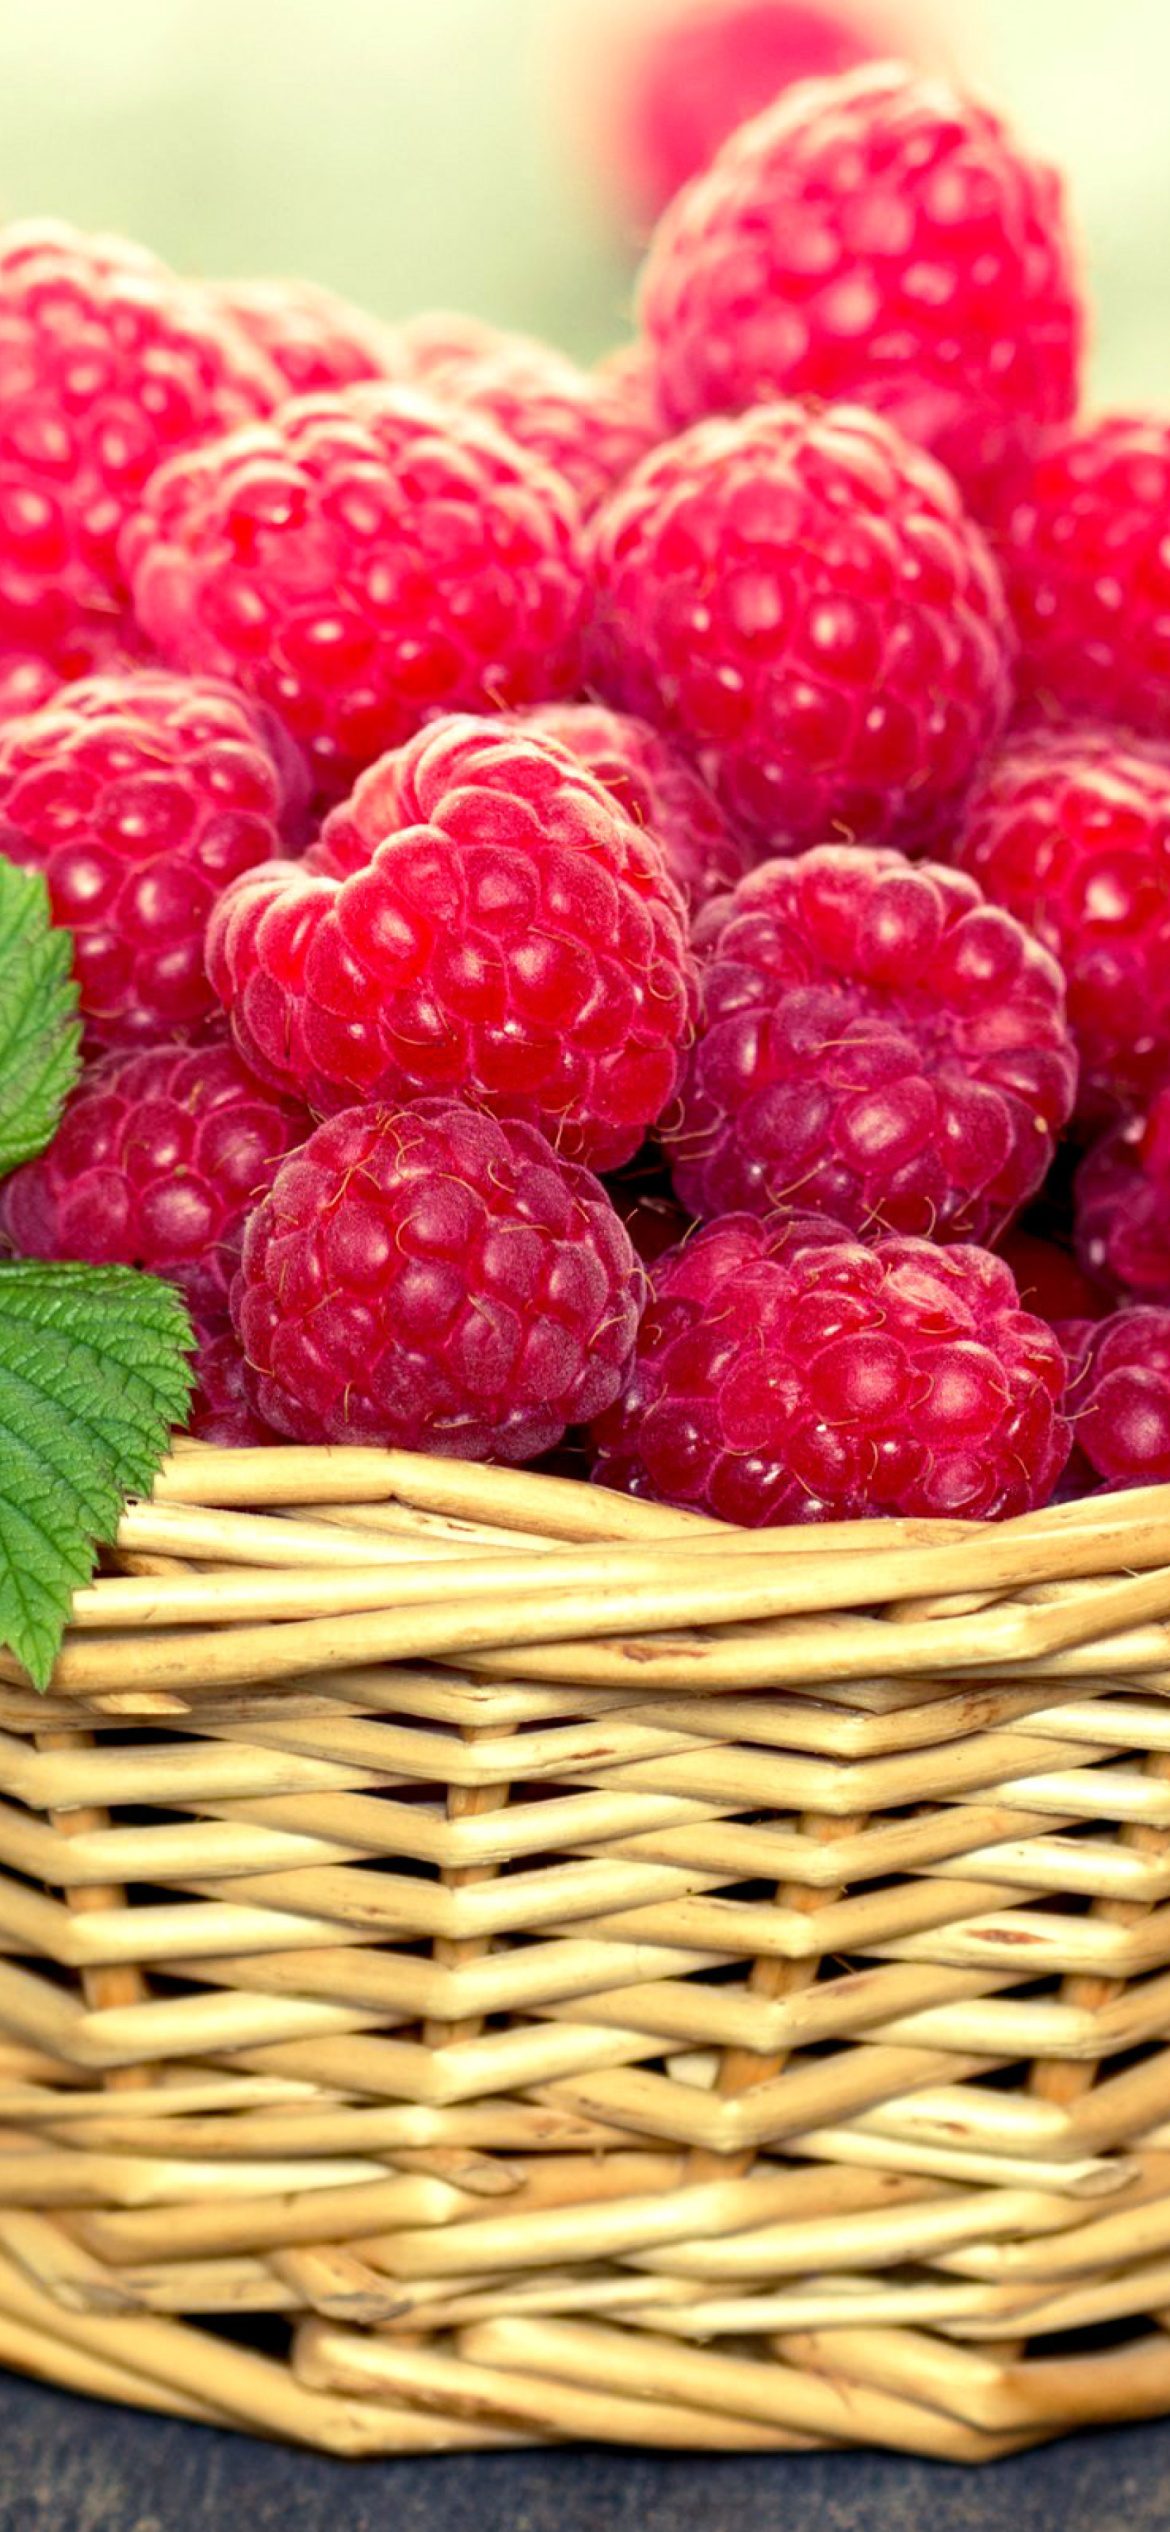 Basket with raspberries wallpaper 1170x2532